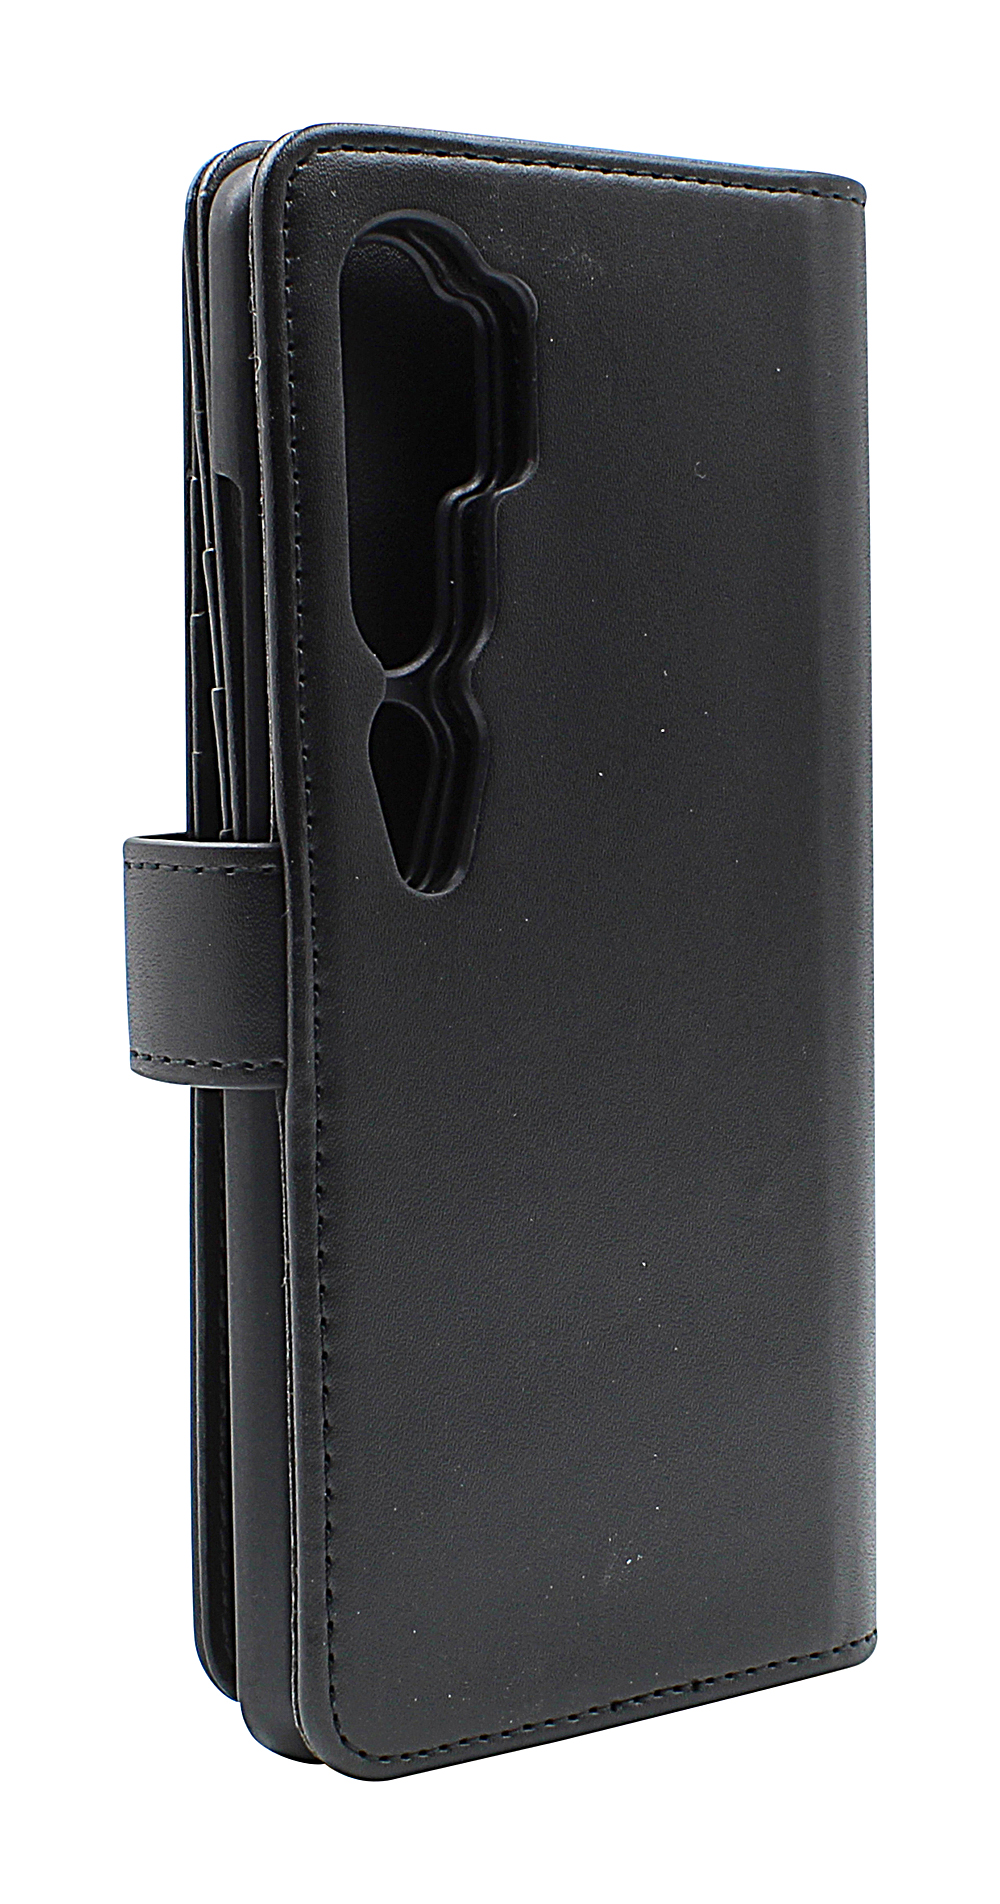 Skimblocker XL Magnet Wallet Xiaomi Mi Note 10 / Mi Note 10 Pro